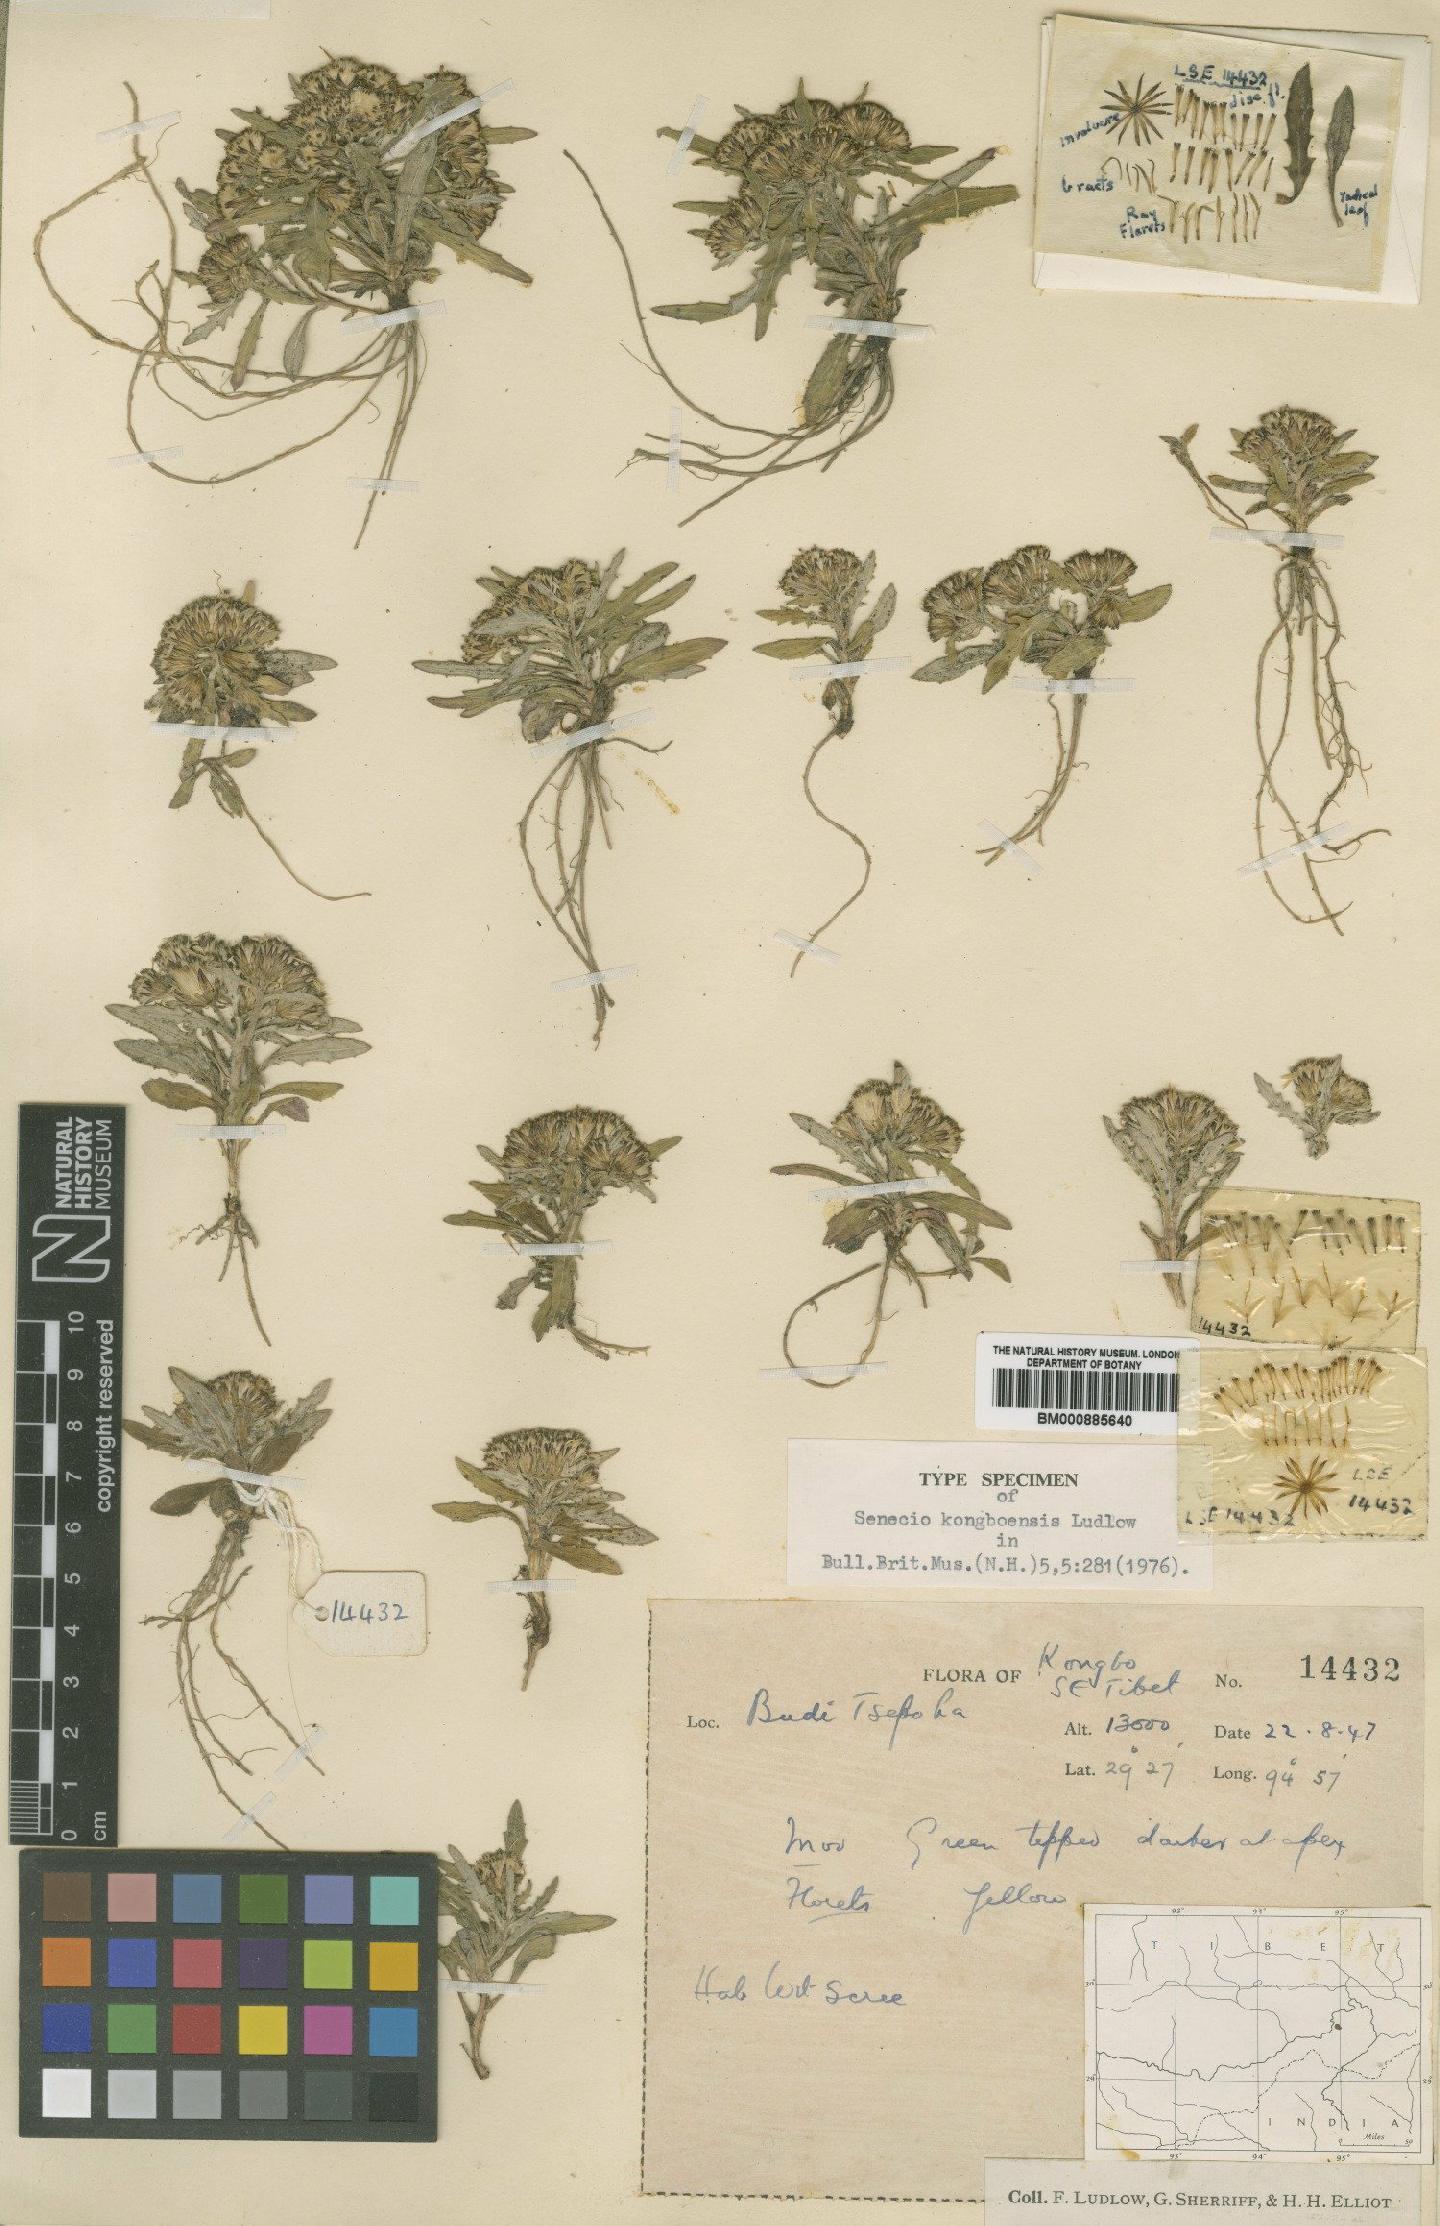 To NHMUK collection (Senecio kongboensis Ludlow; Holotype; NHMUK:ecatalogue:4995216)